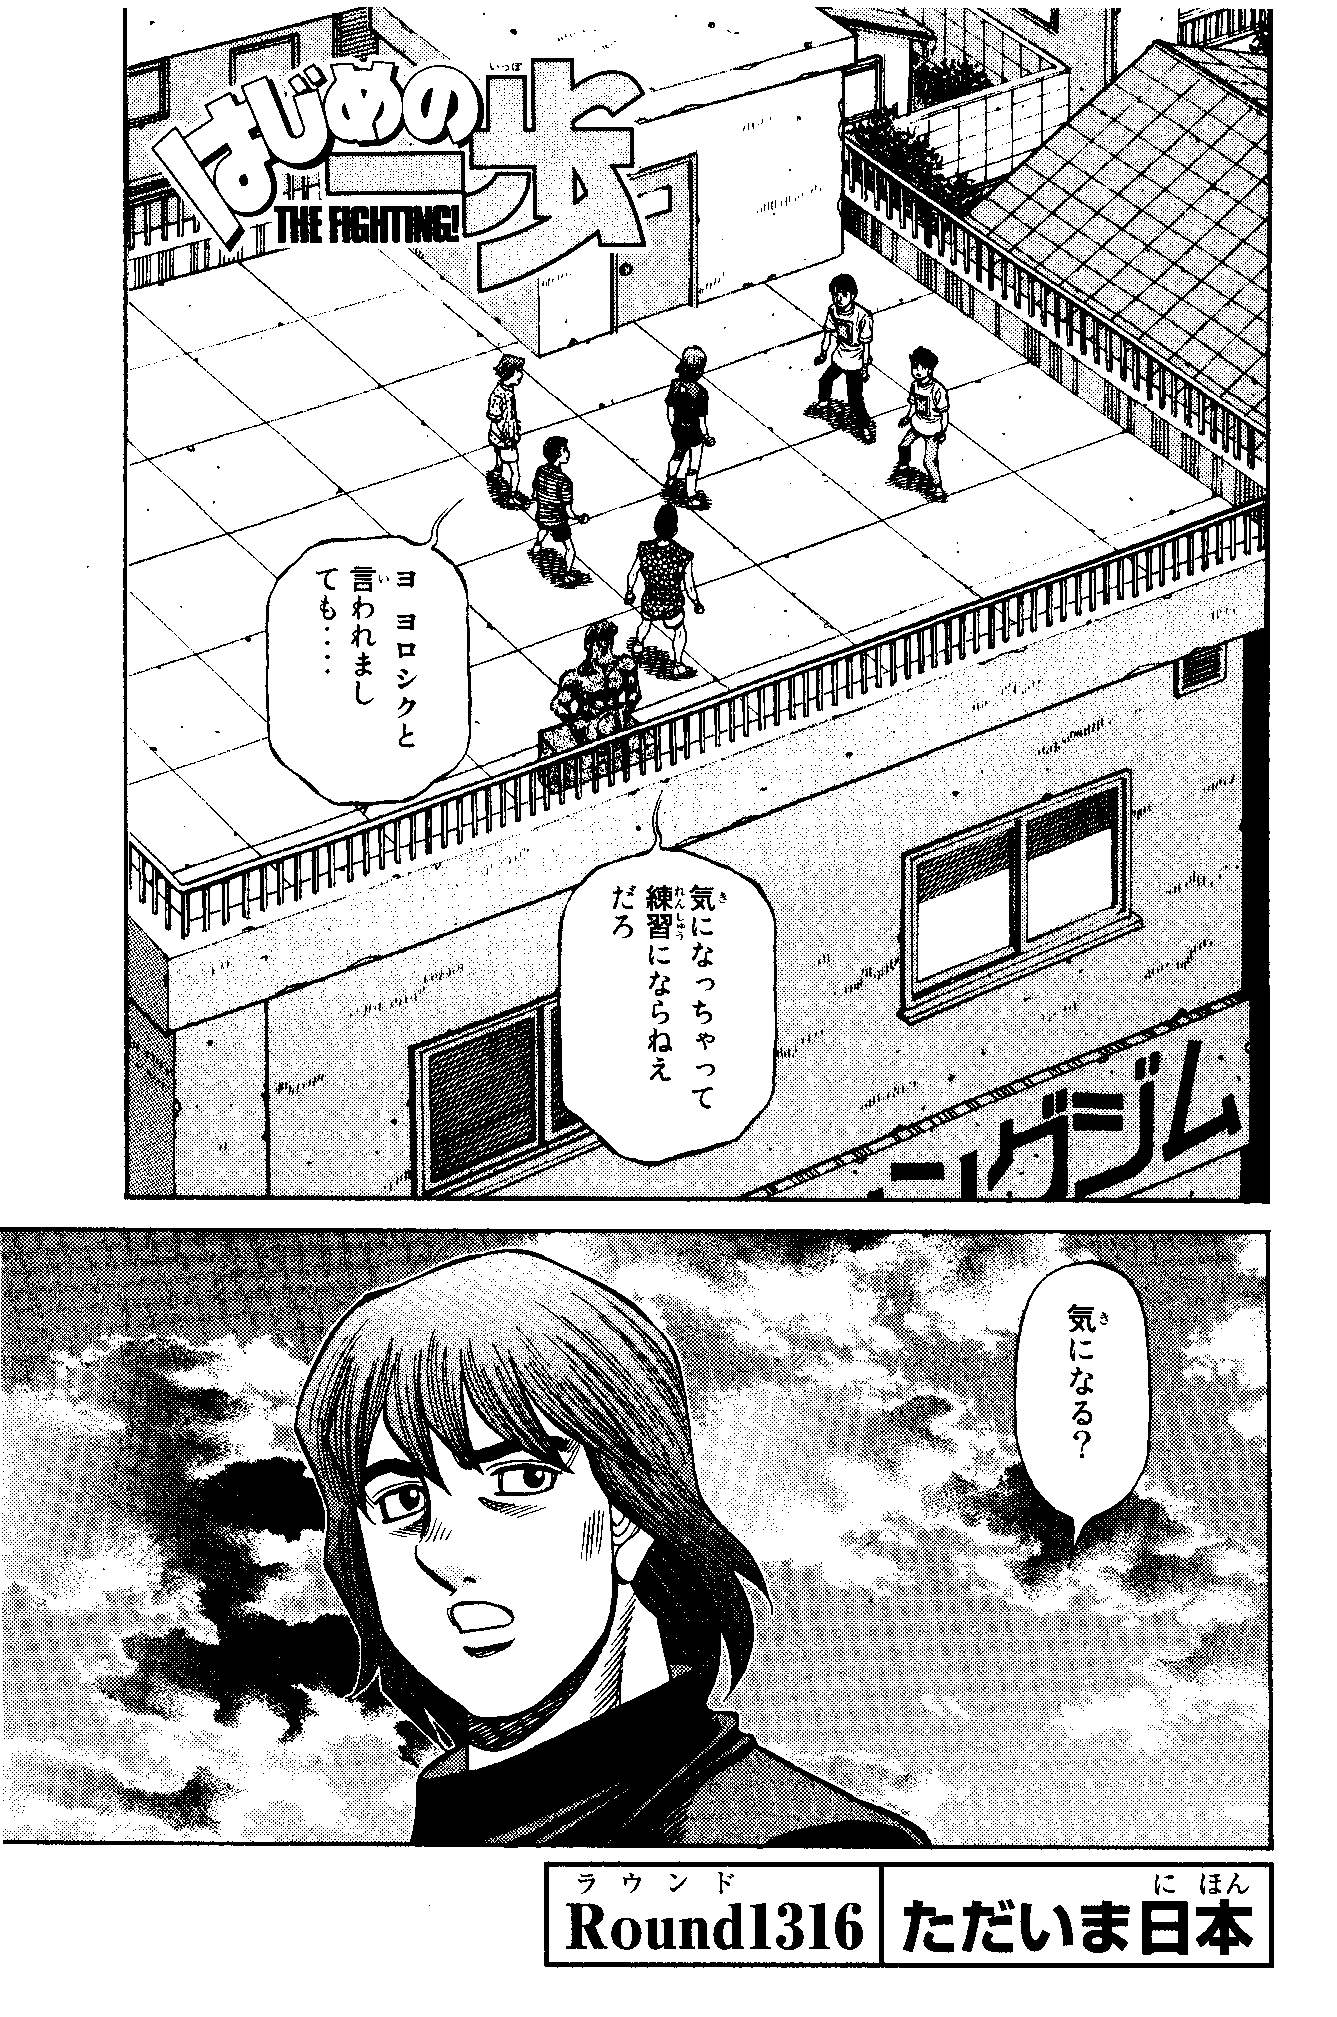 Hajime no Ippo Capítulo 1303 - Manga Online